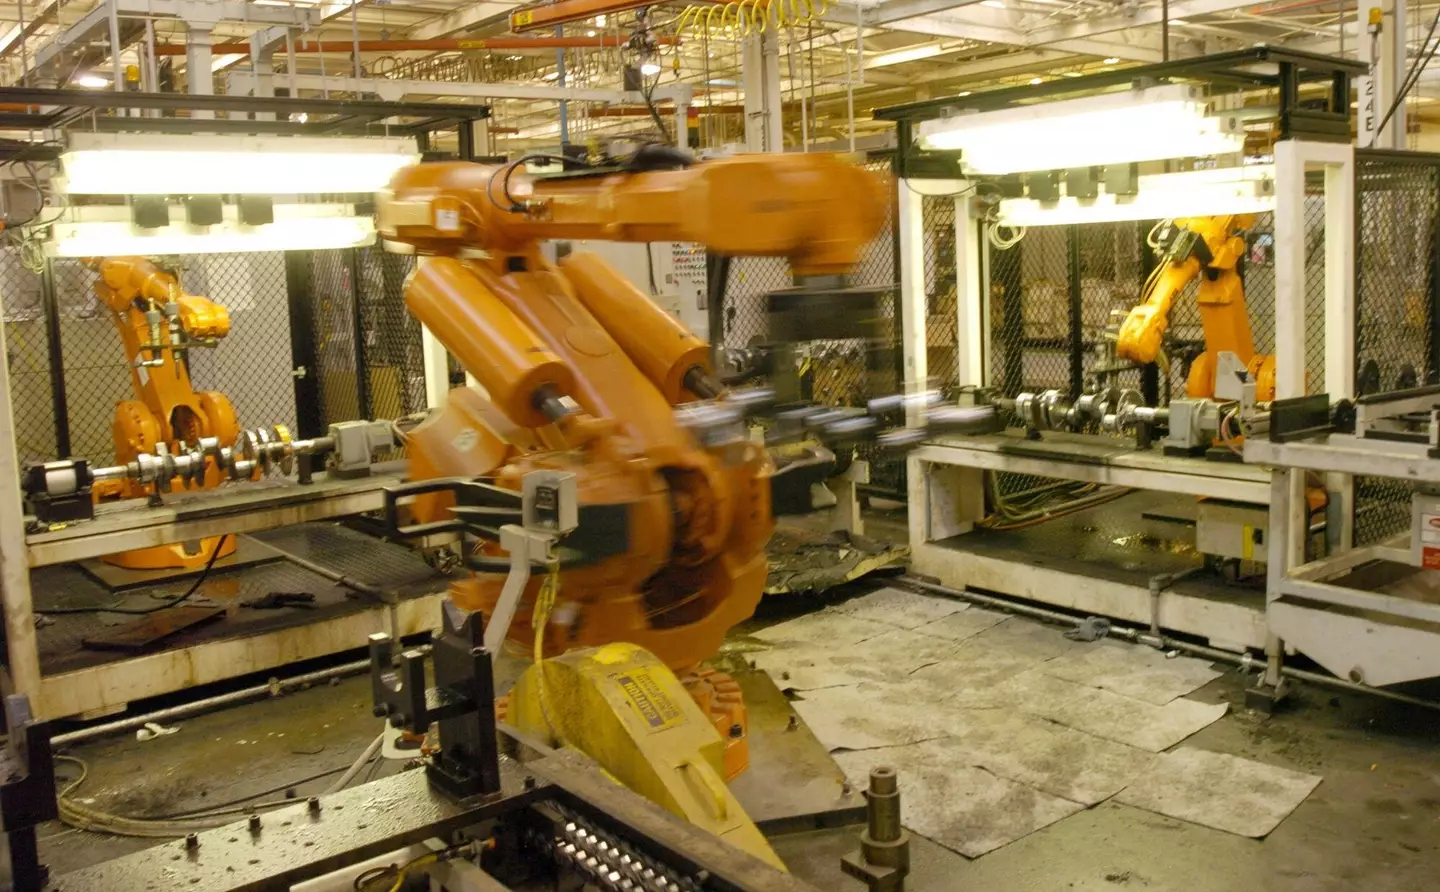 Robot manufacturing (Alamy)